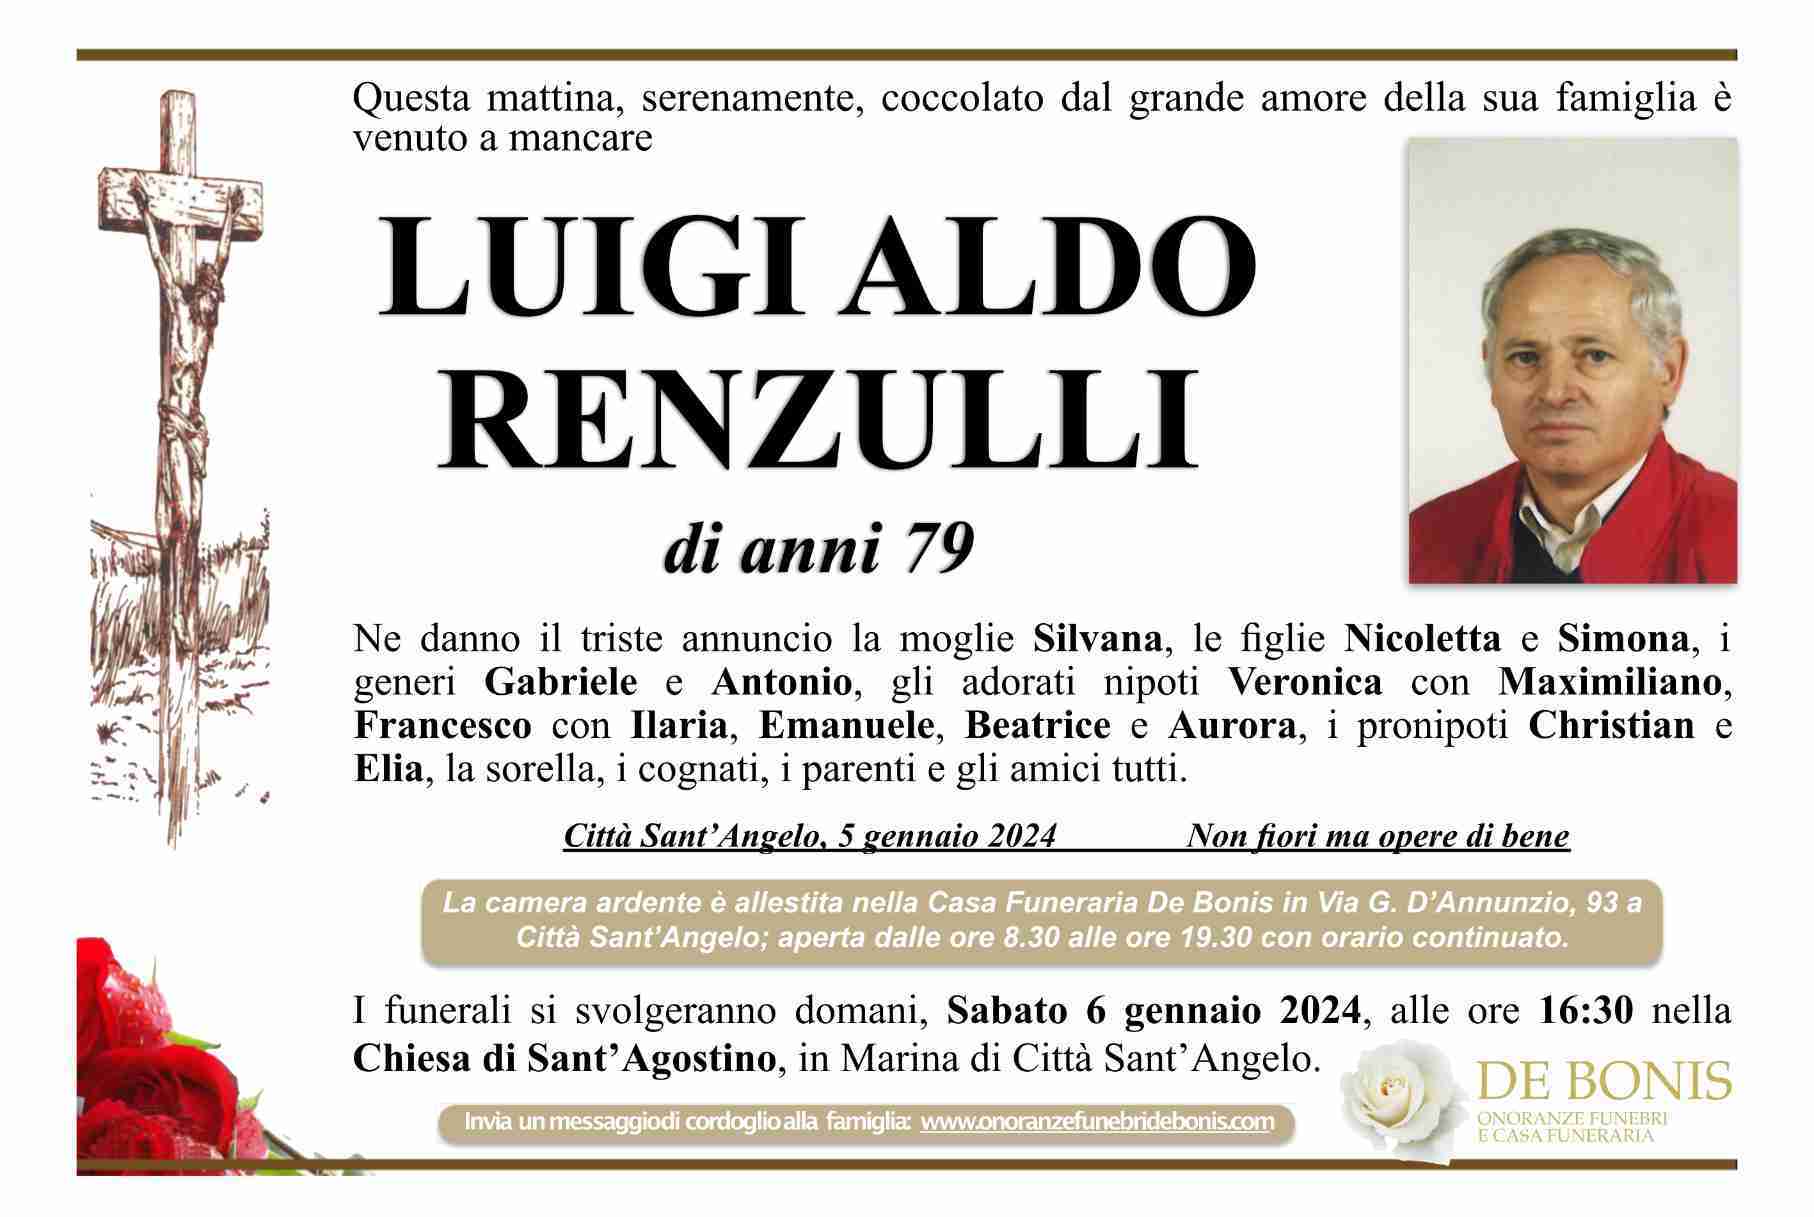 Luigi Aldo Renzulli